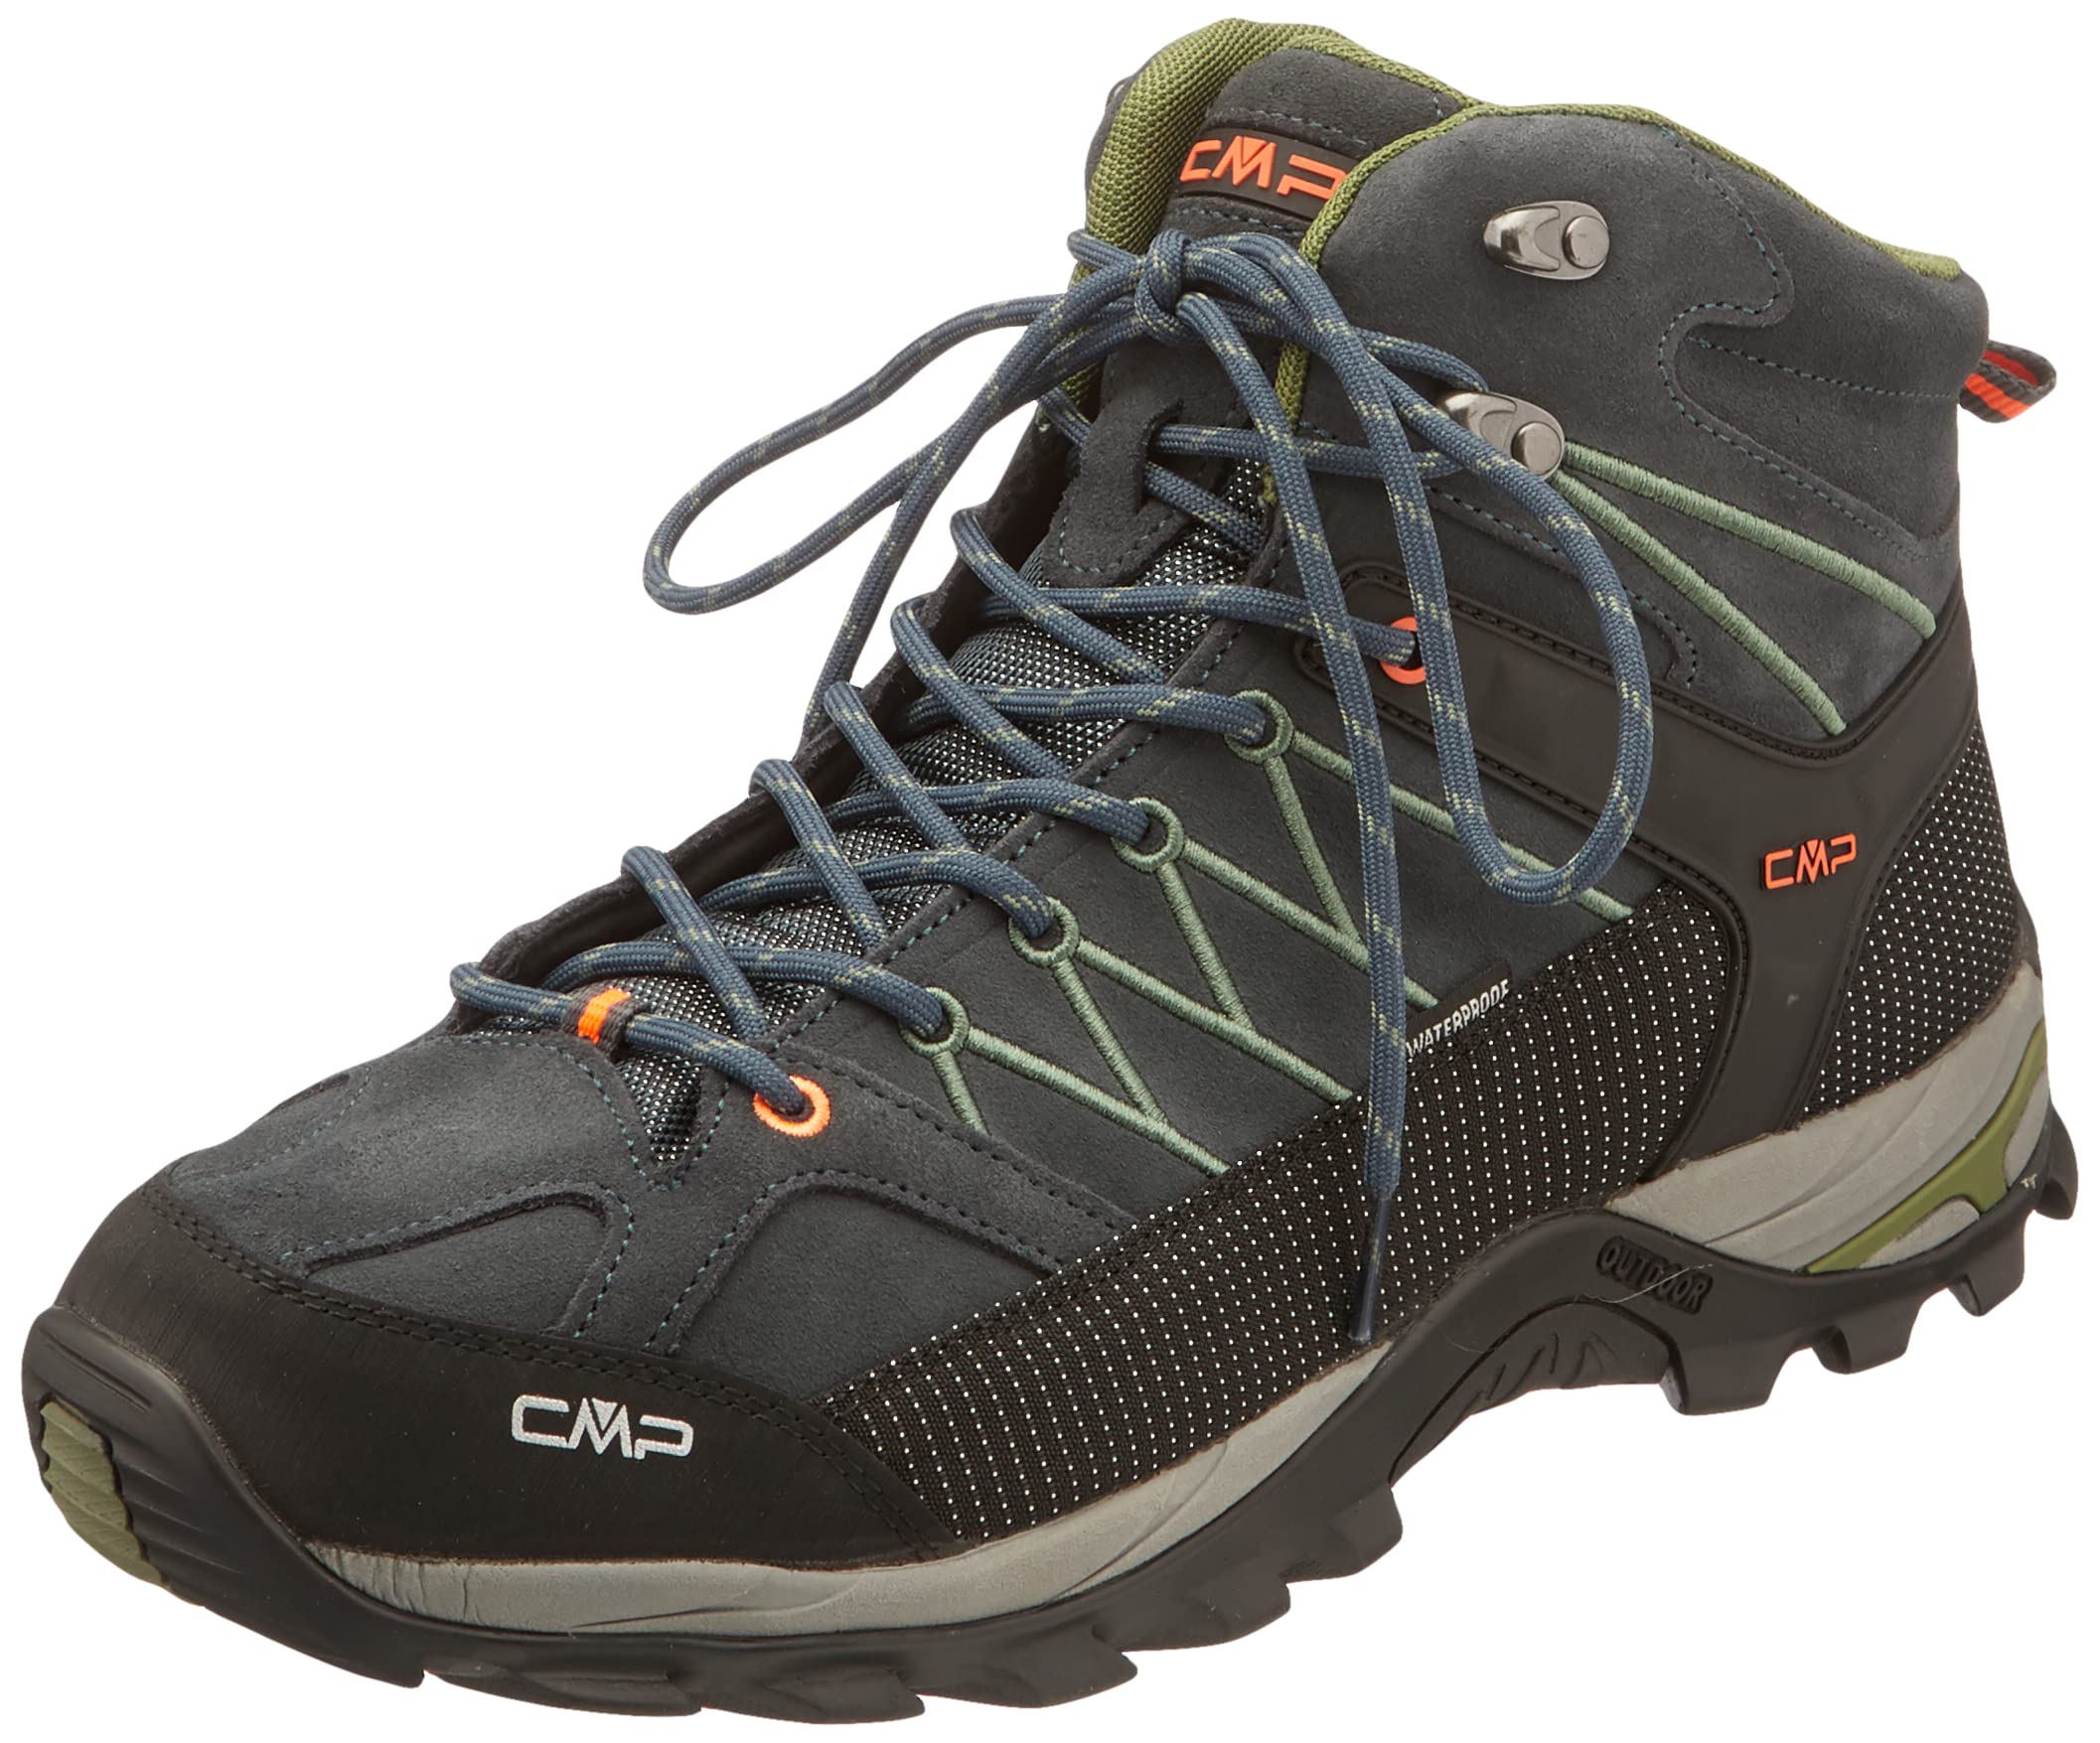 CMP - Rigel Mid Trekking Shoes Wp, Antracite-Torba, 43